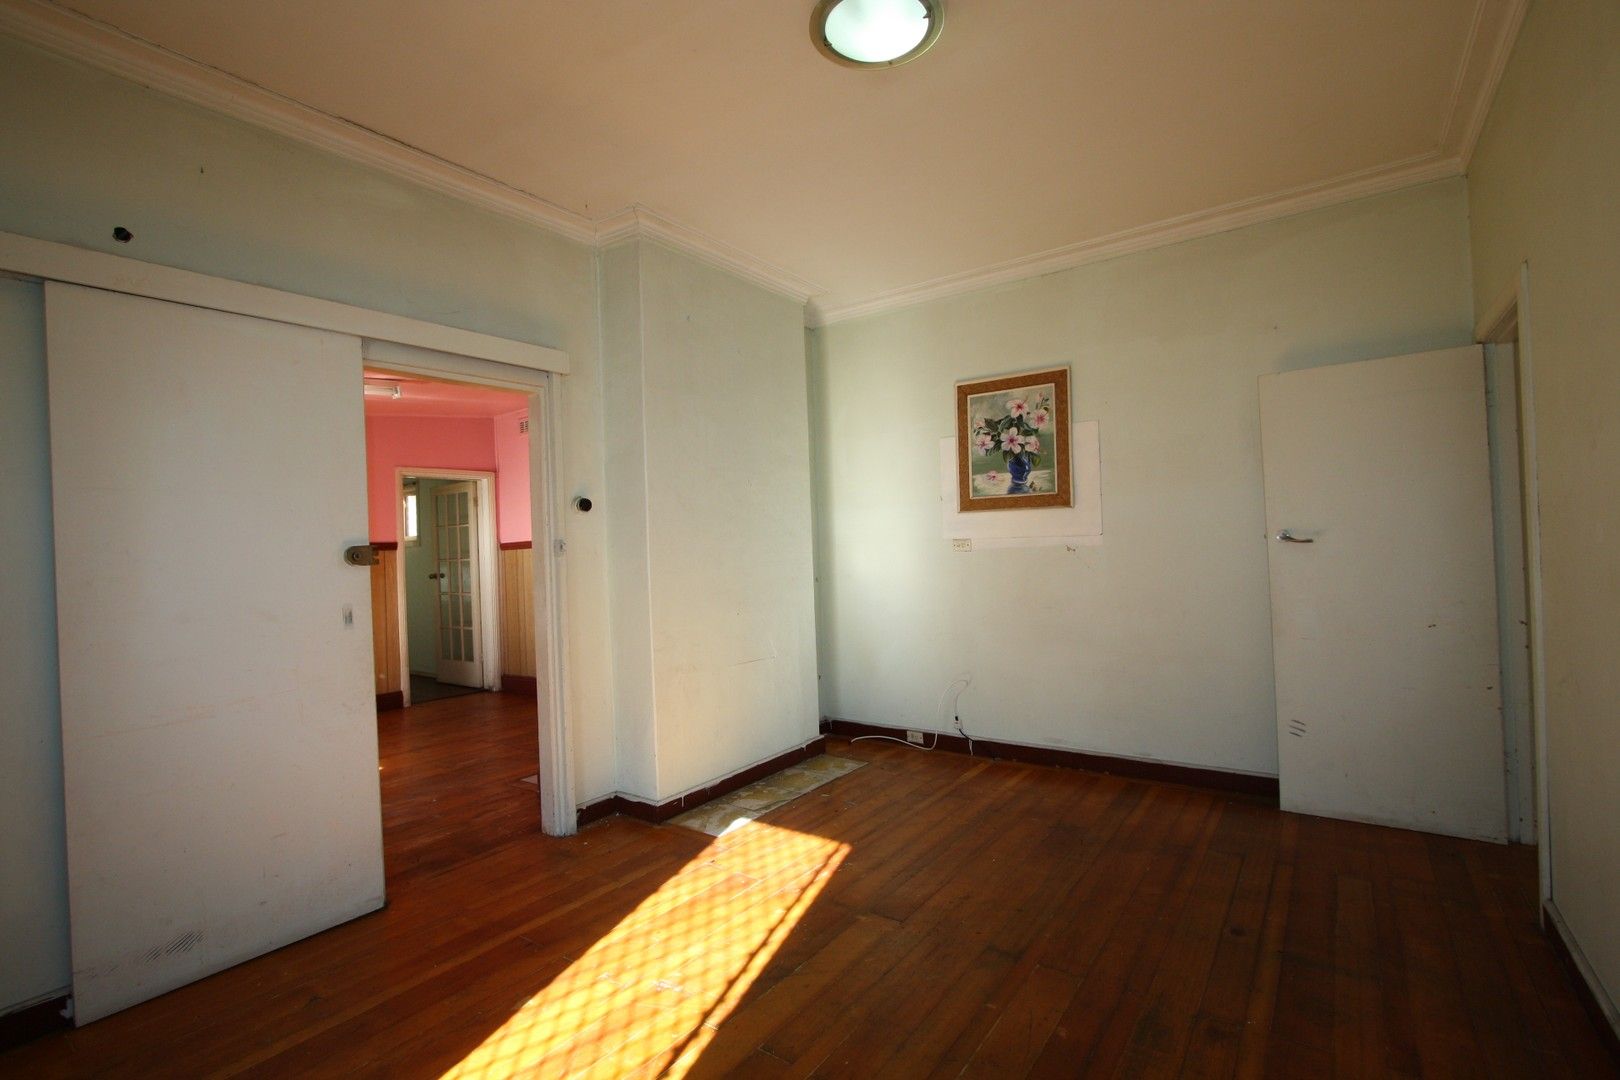 4 bedrooms House in 67 Good Street GRANVILLE NSW, 2142